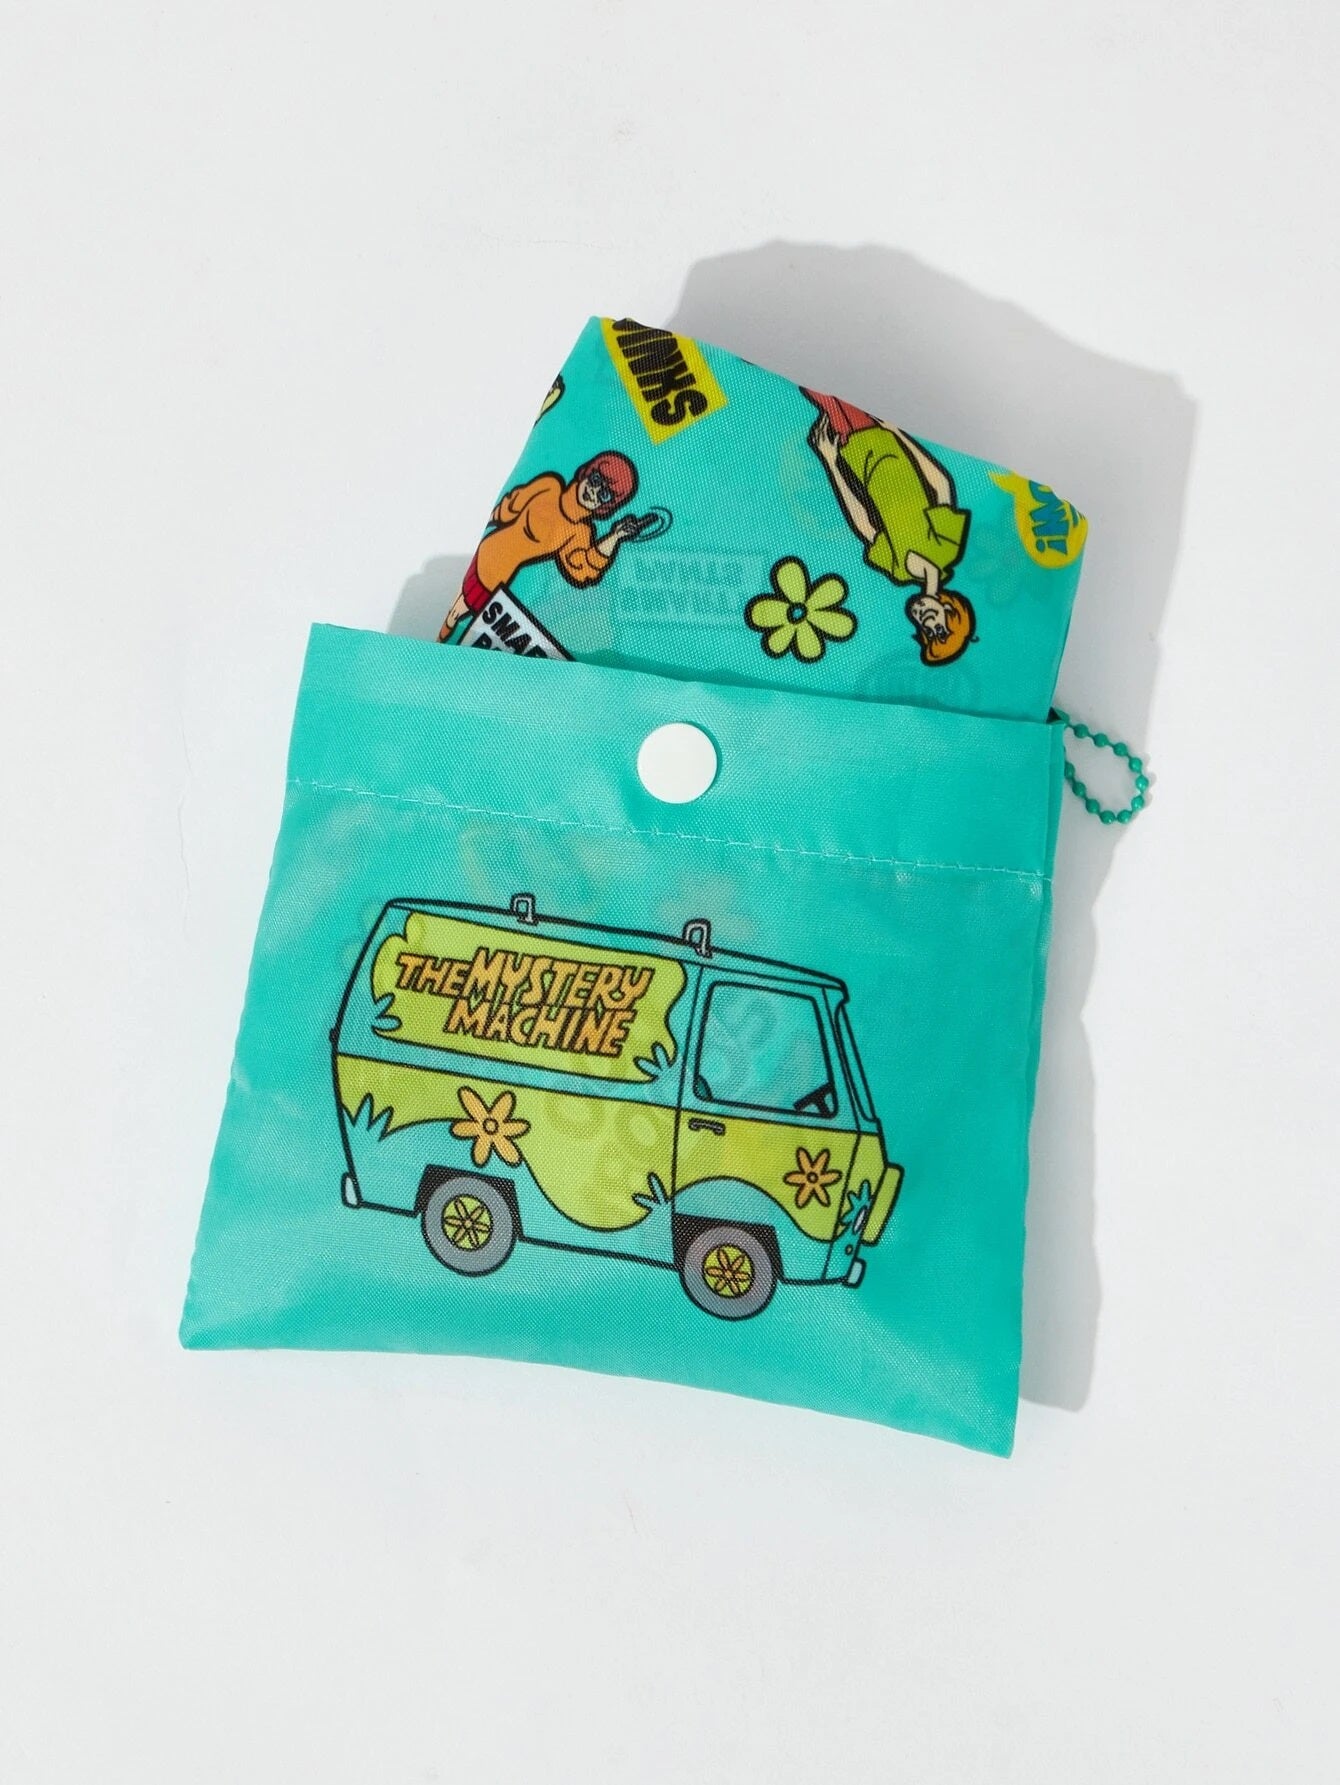 Scooby Doo Tote Shopper Bag